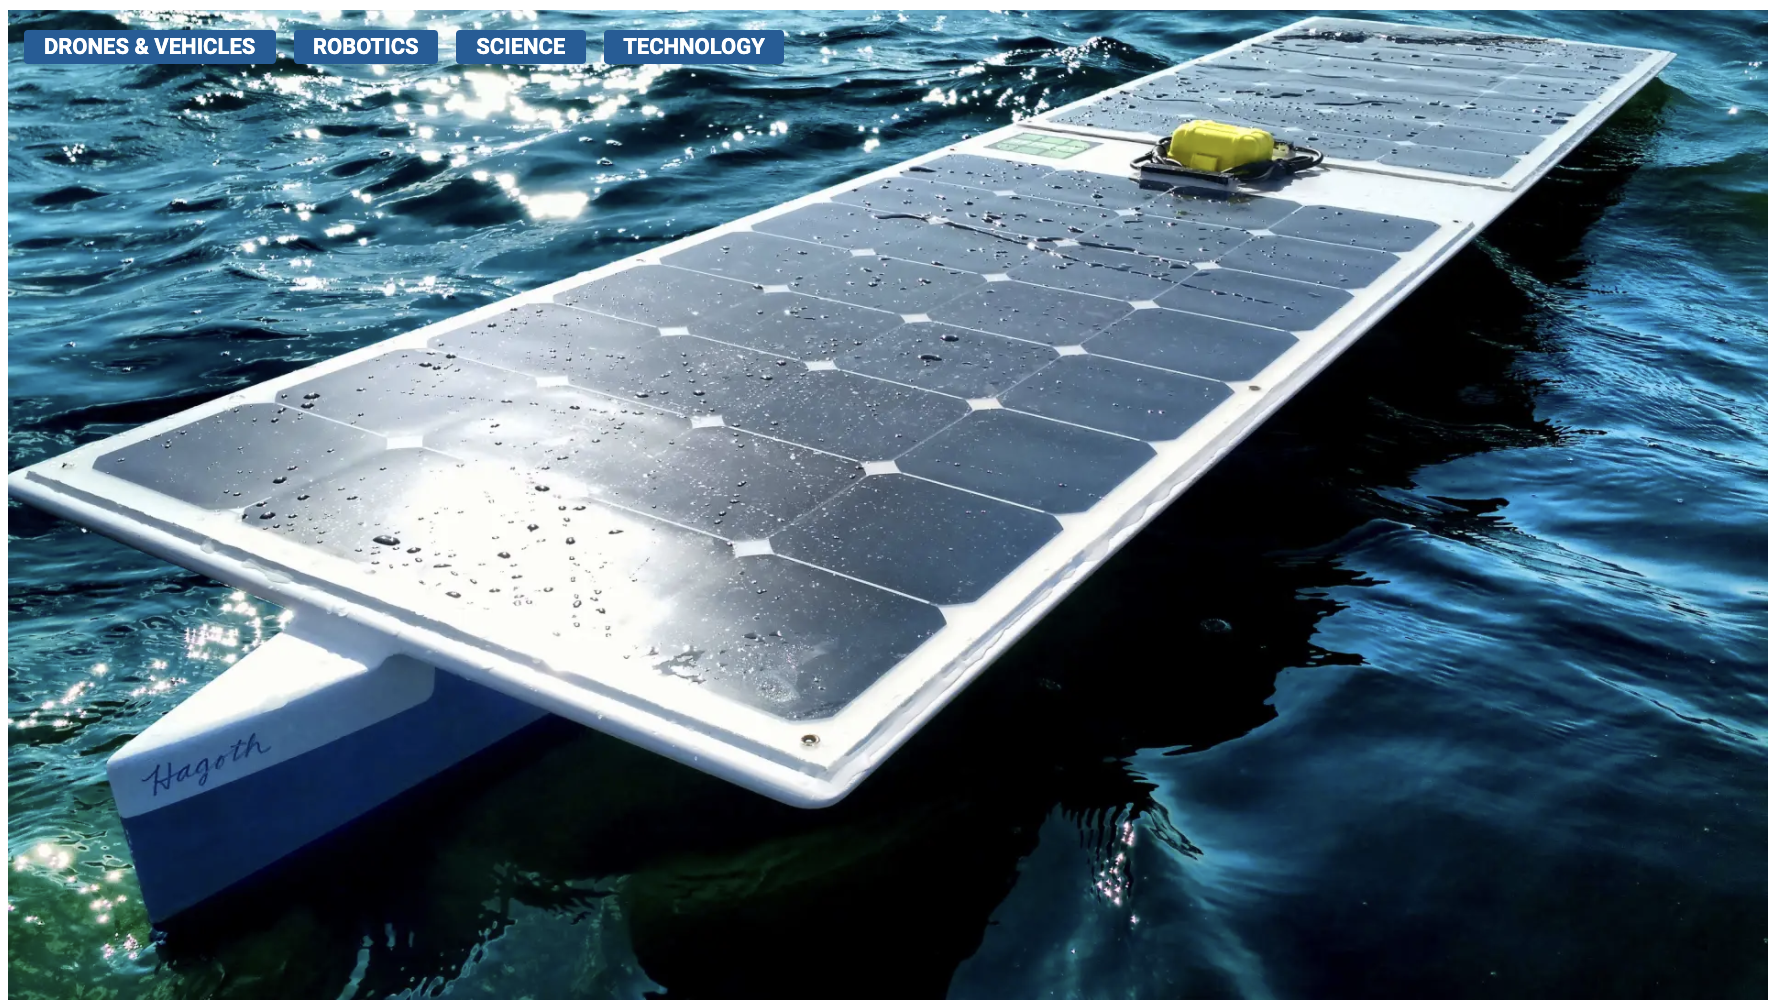 Solar Powered Boat